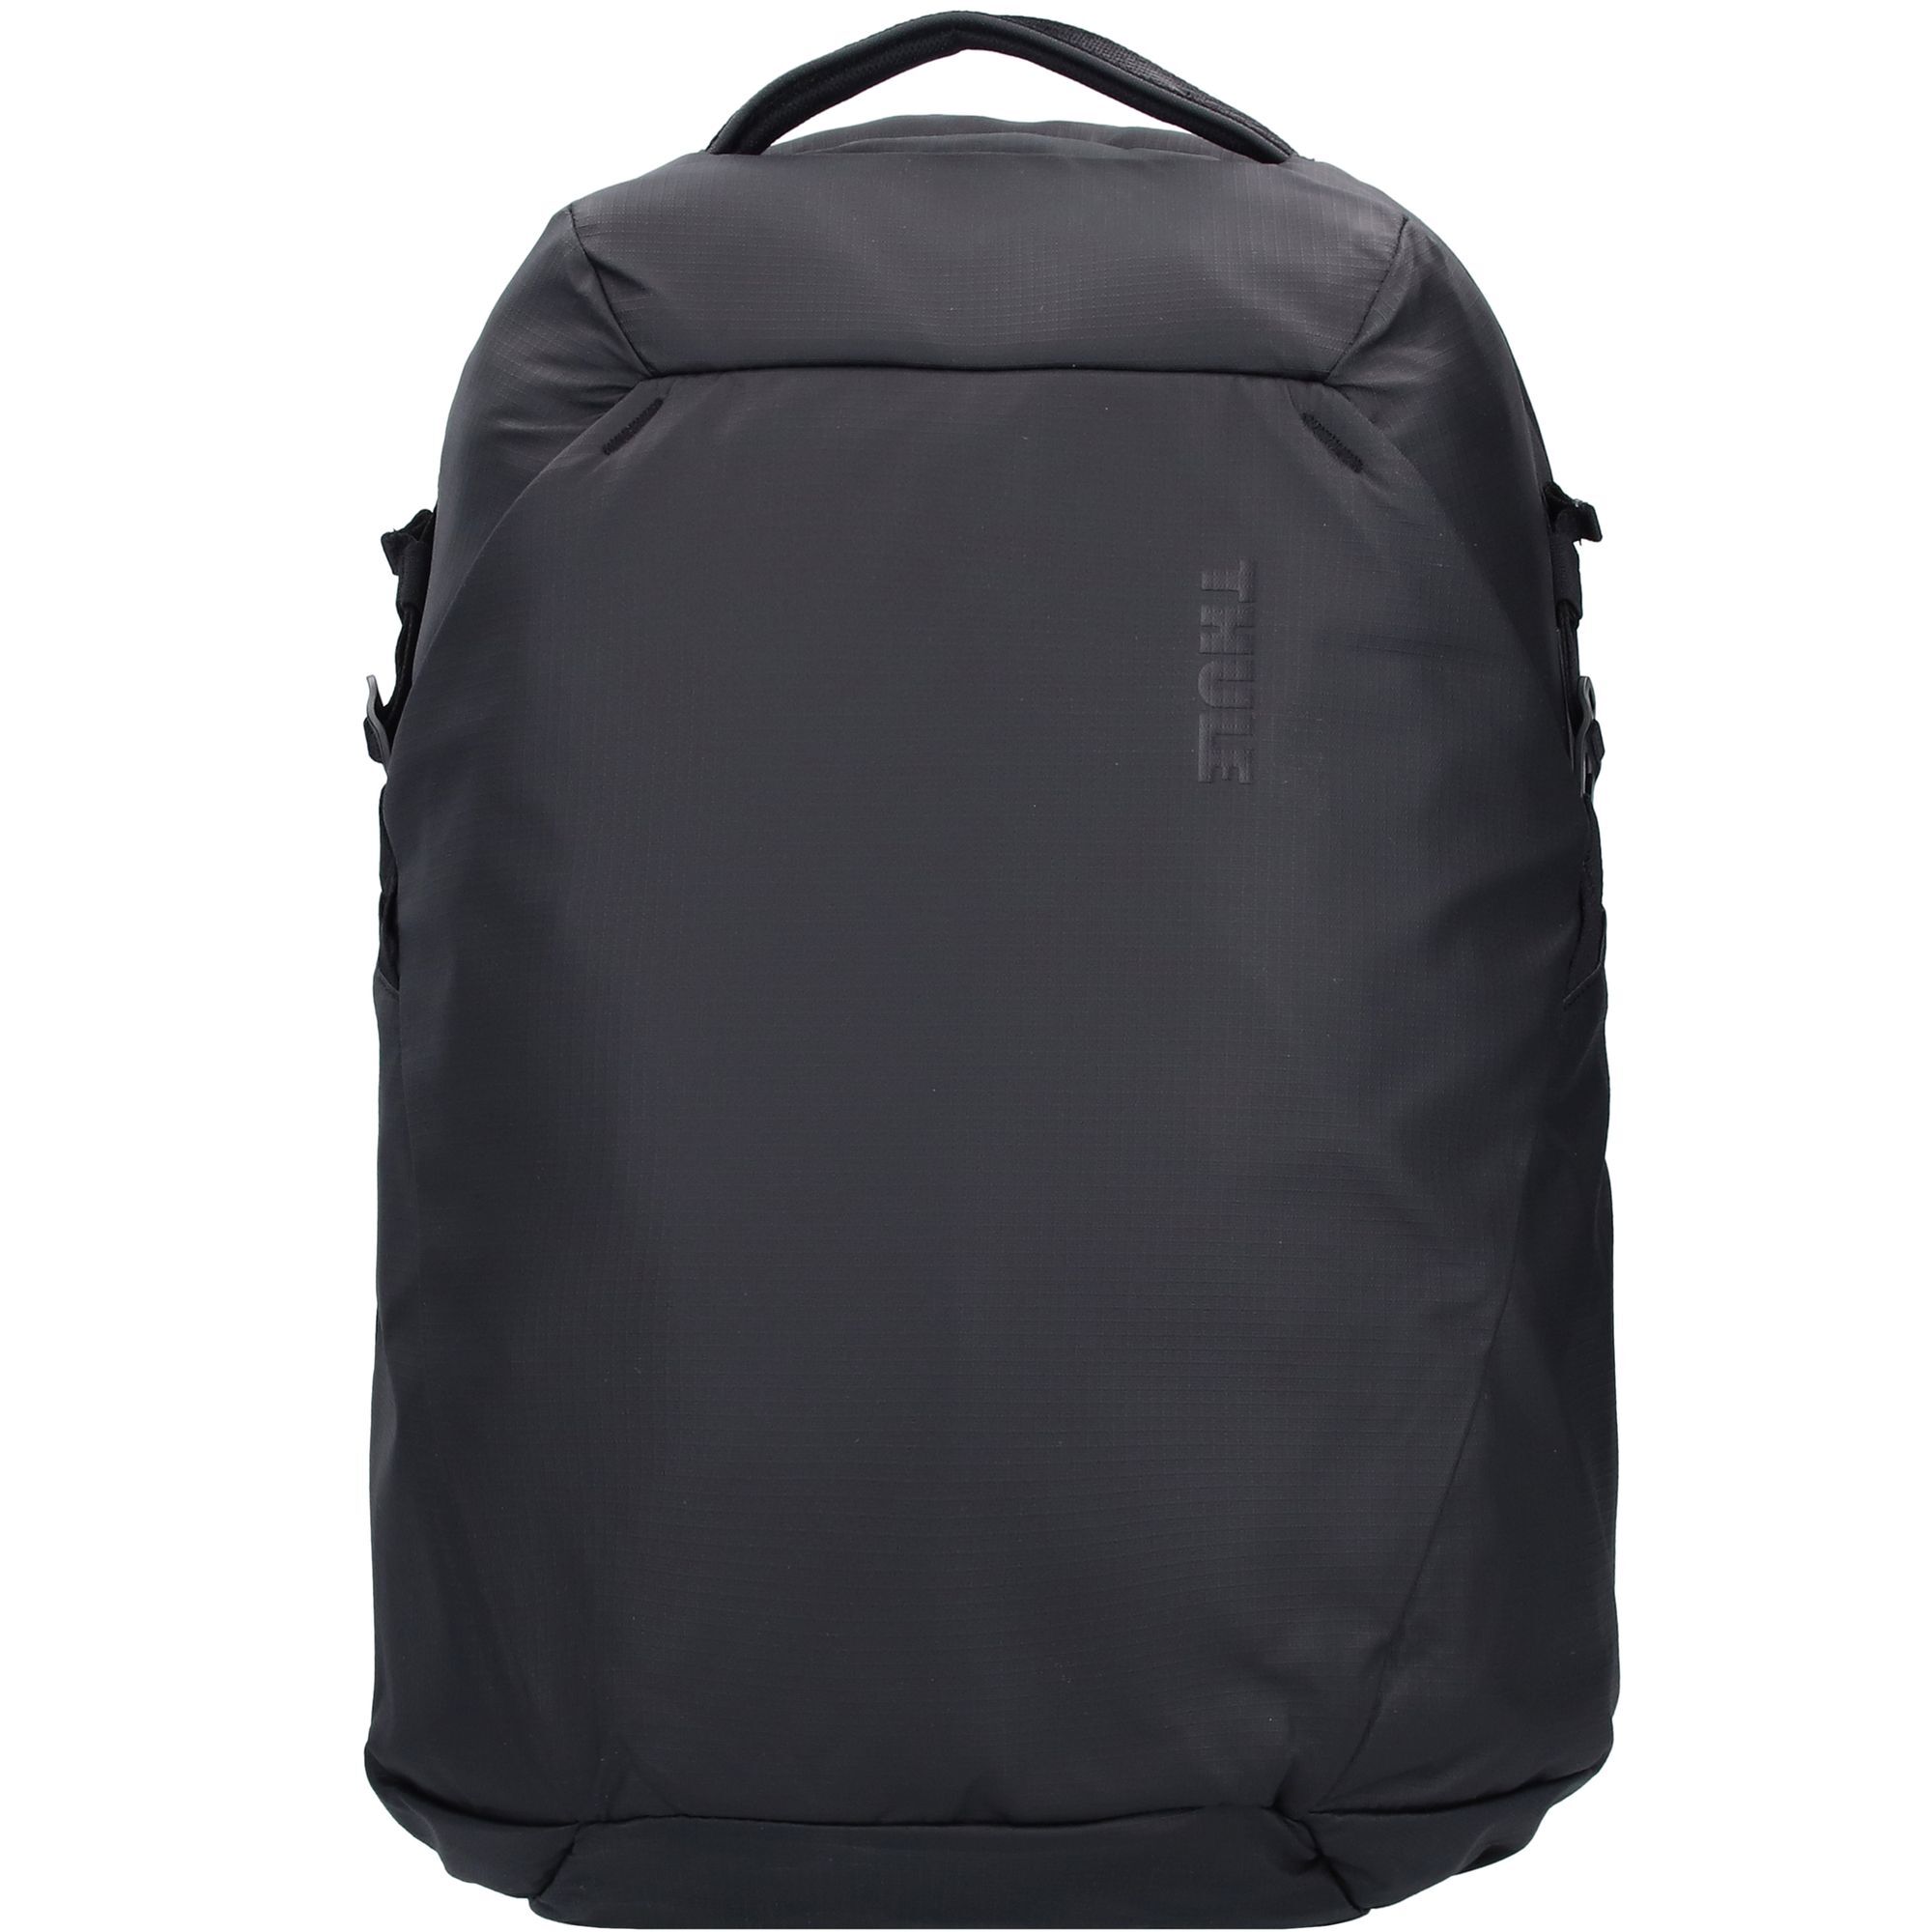 Рюкзак Thule Tact 45 cm Laptopfach, черный рюкзак thule notus 45 cm laptopfach цвет dense teal